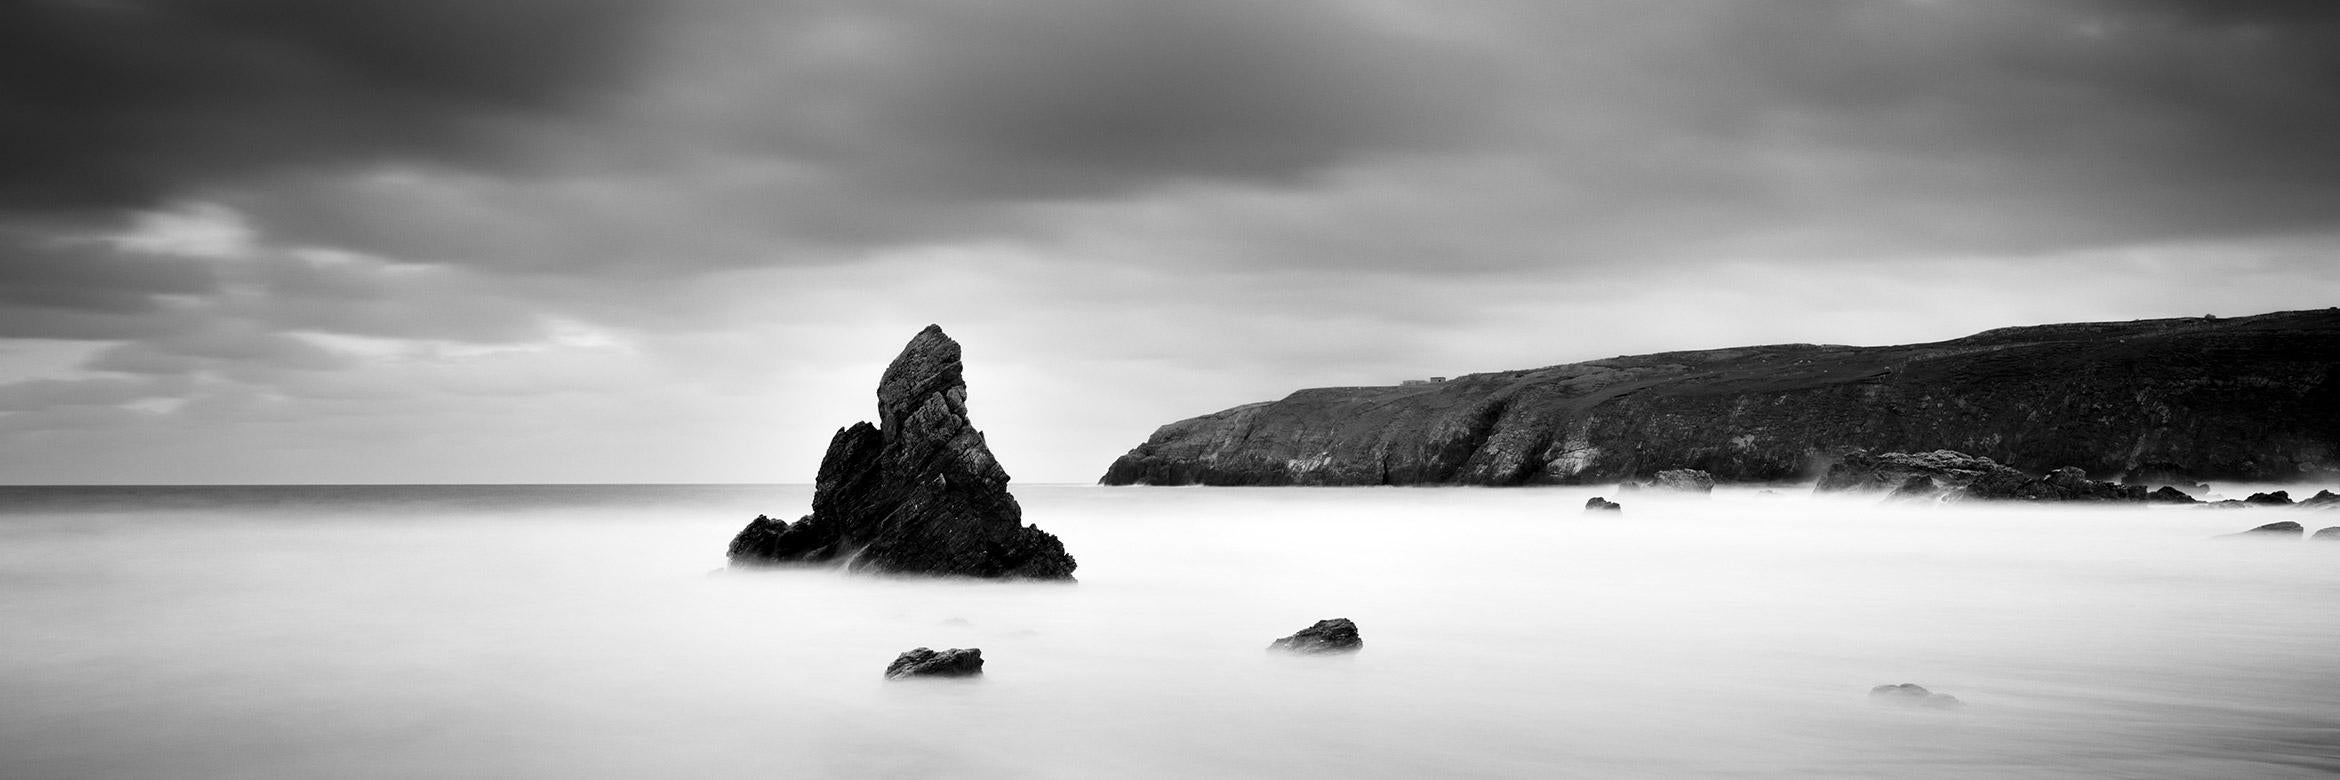 Sea Stack Panorama, shoreline, Scotland, black and white landscape photography